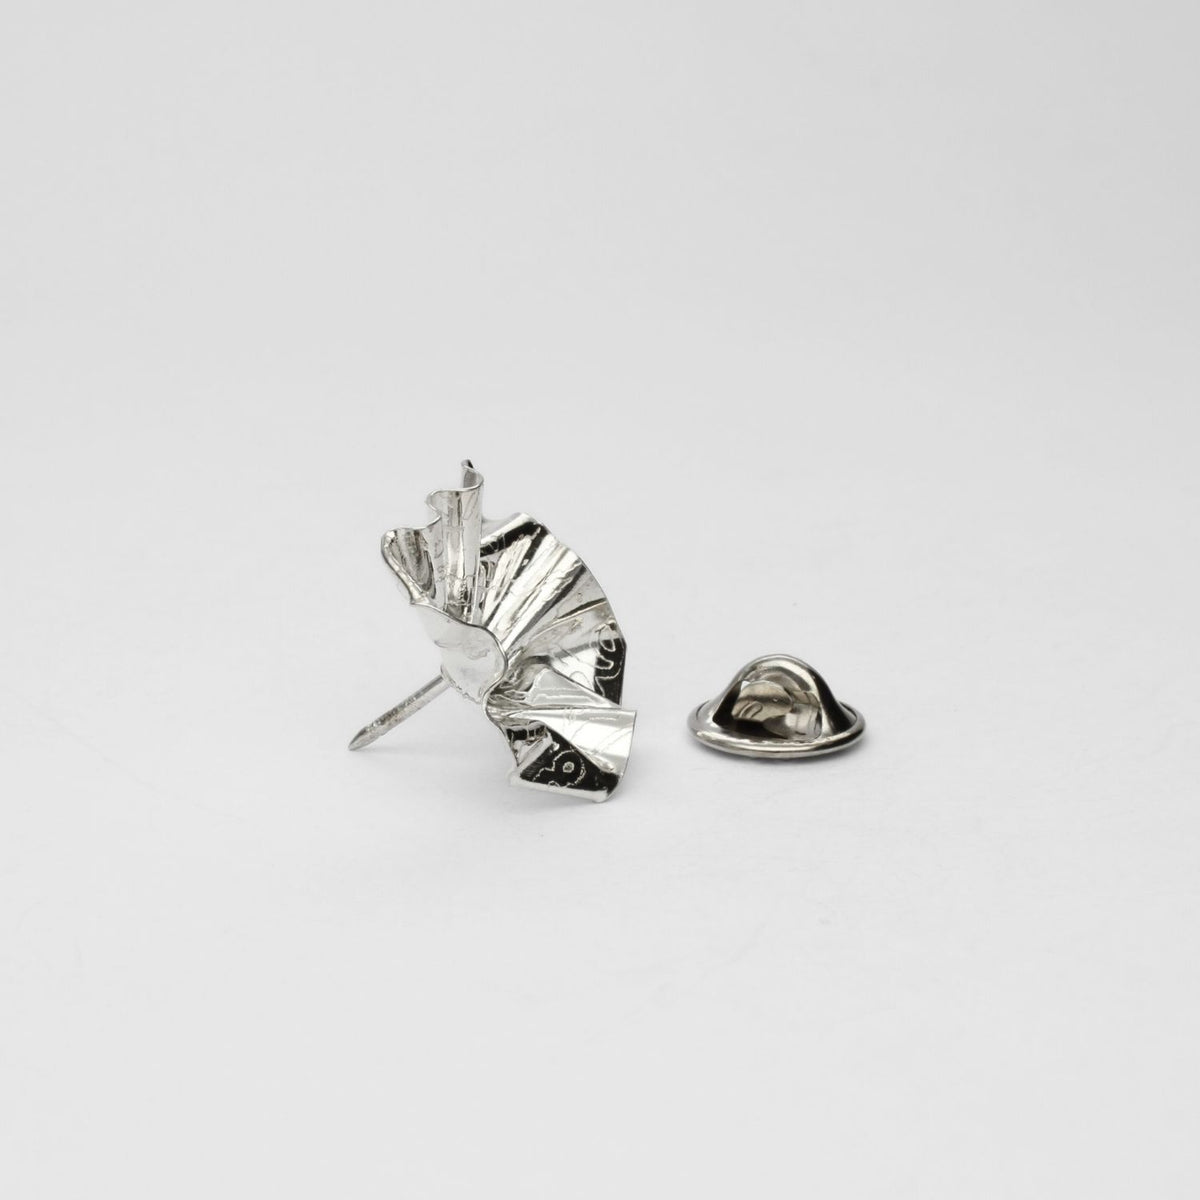 Decorative Concepts: Silver Lapel / Tie Pin